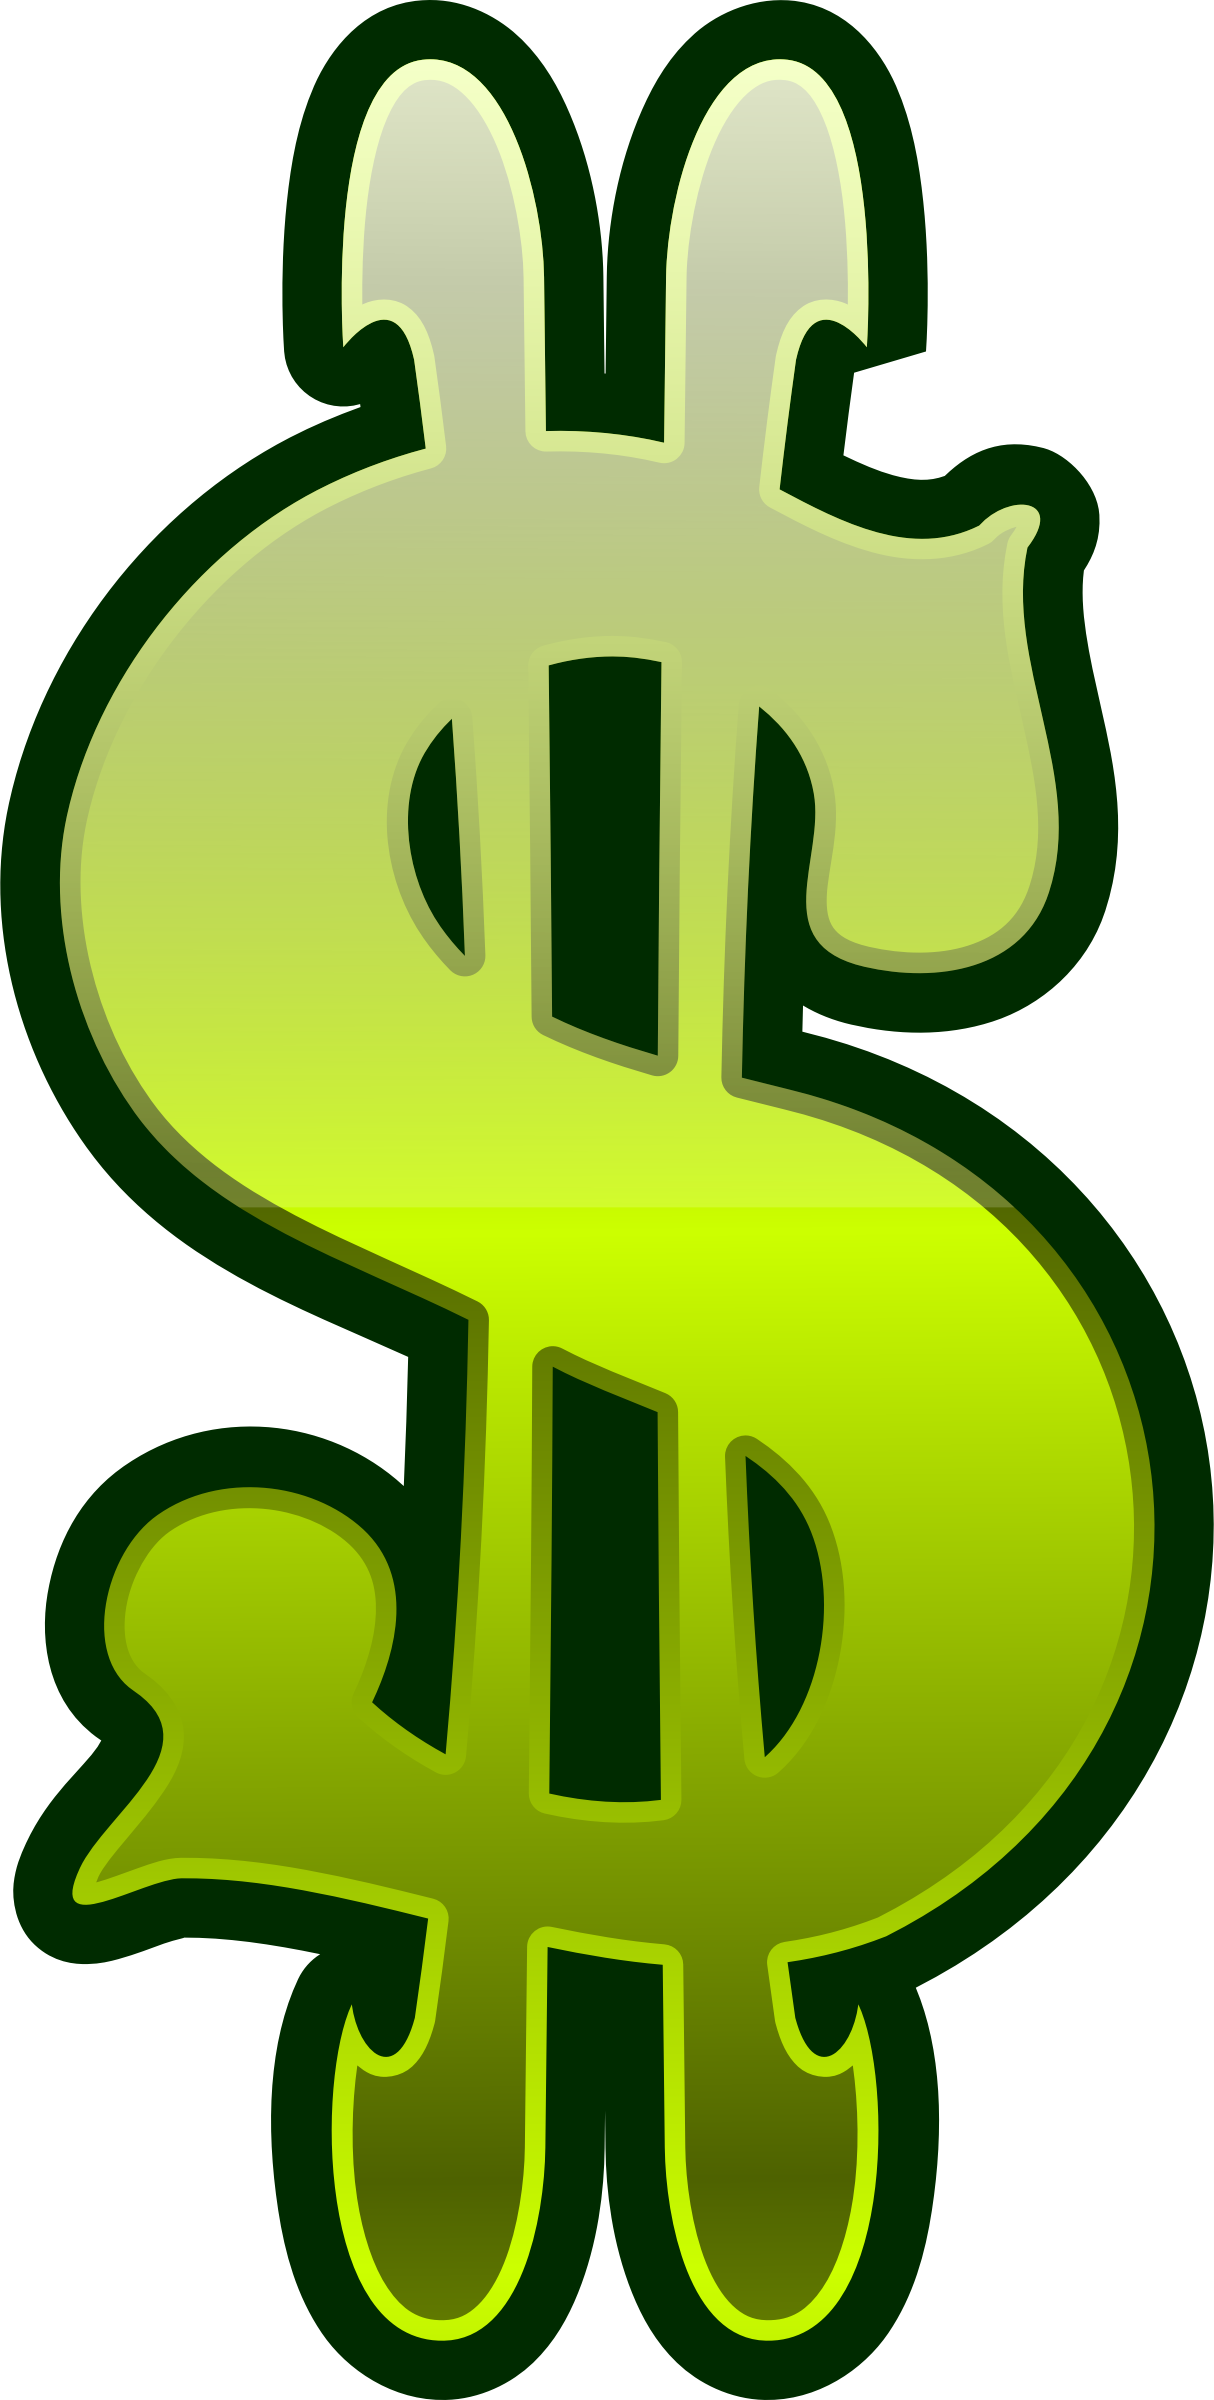 Green Slot Machine Dollar Sign vector clipart image - Free stock photo - Public Domain photo - CC0 Images